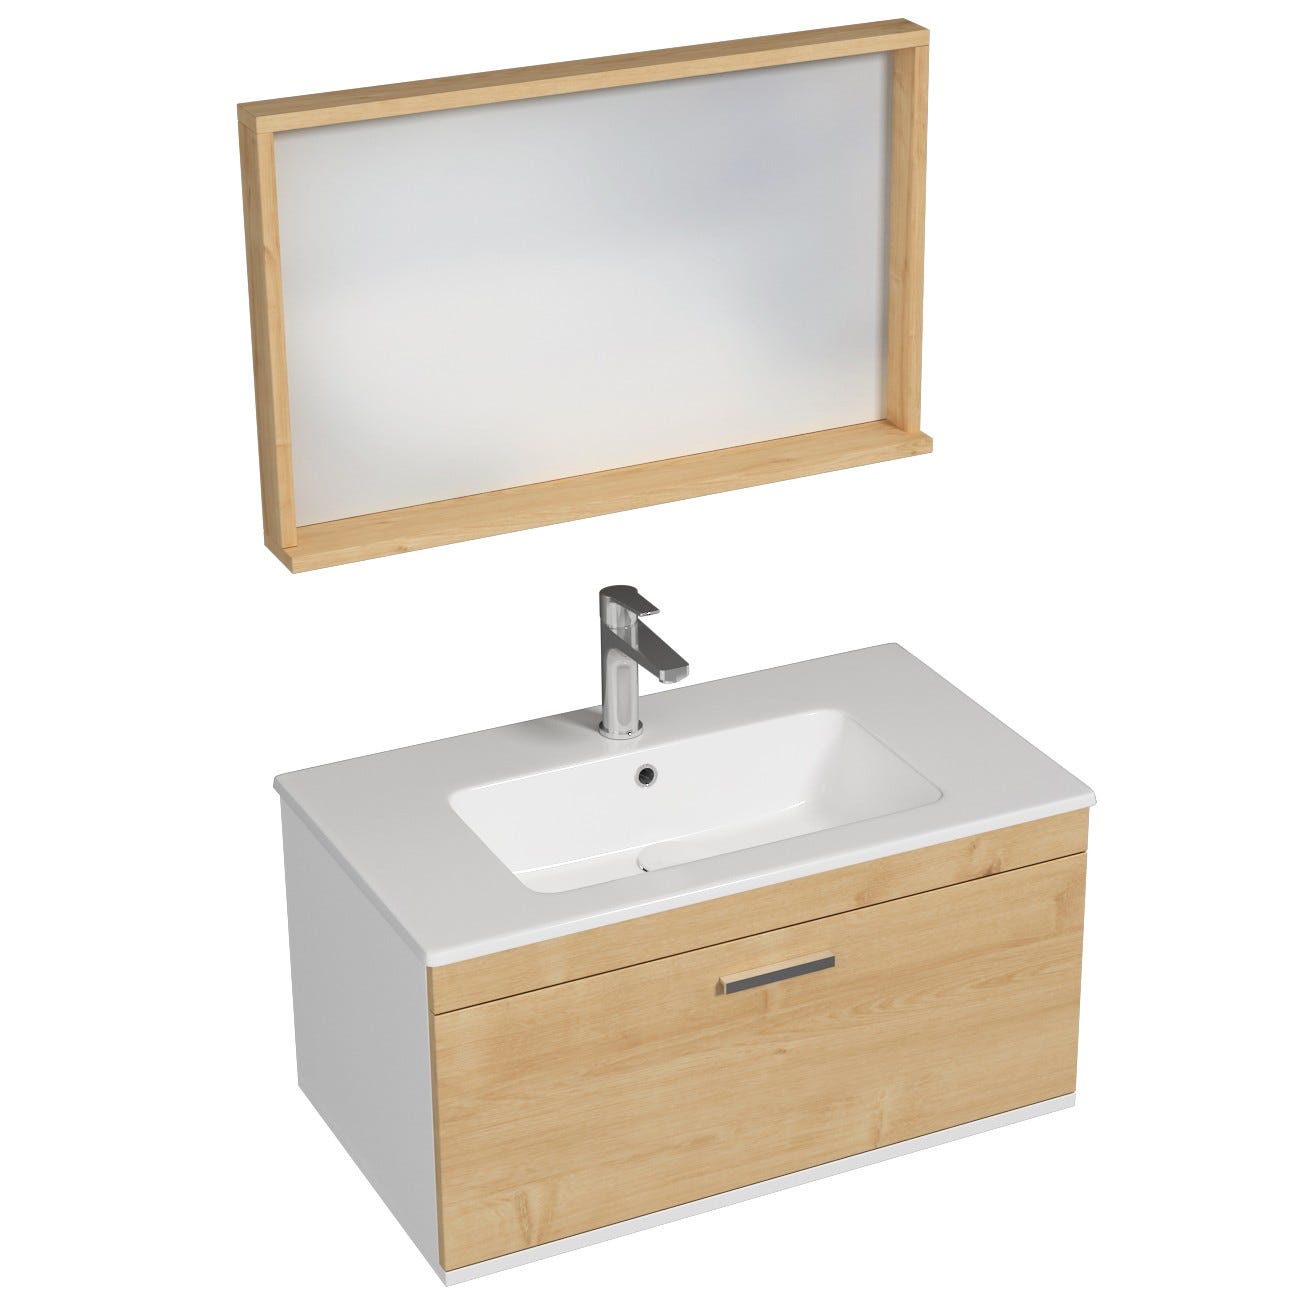 RUBITE Meuble salle de bain simple vasque 1 tiroir chêne clair largeur 80 cm + miroir cadre 1